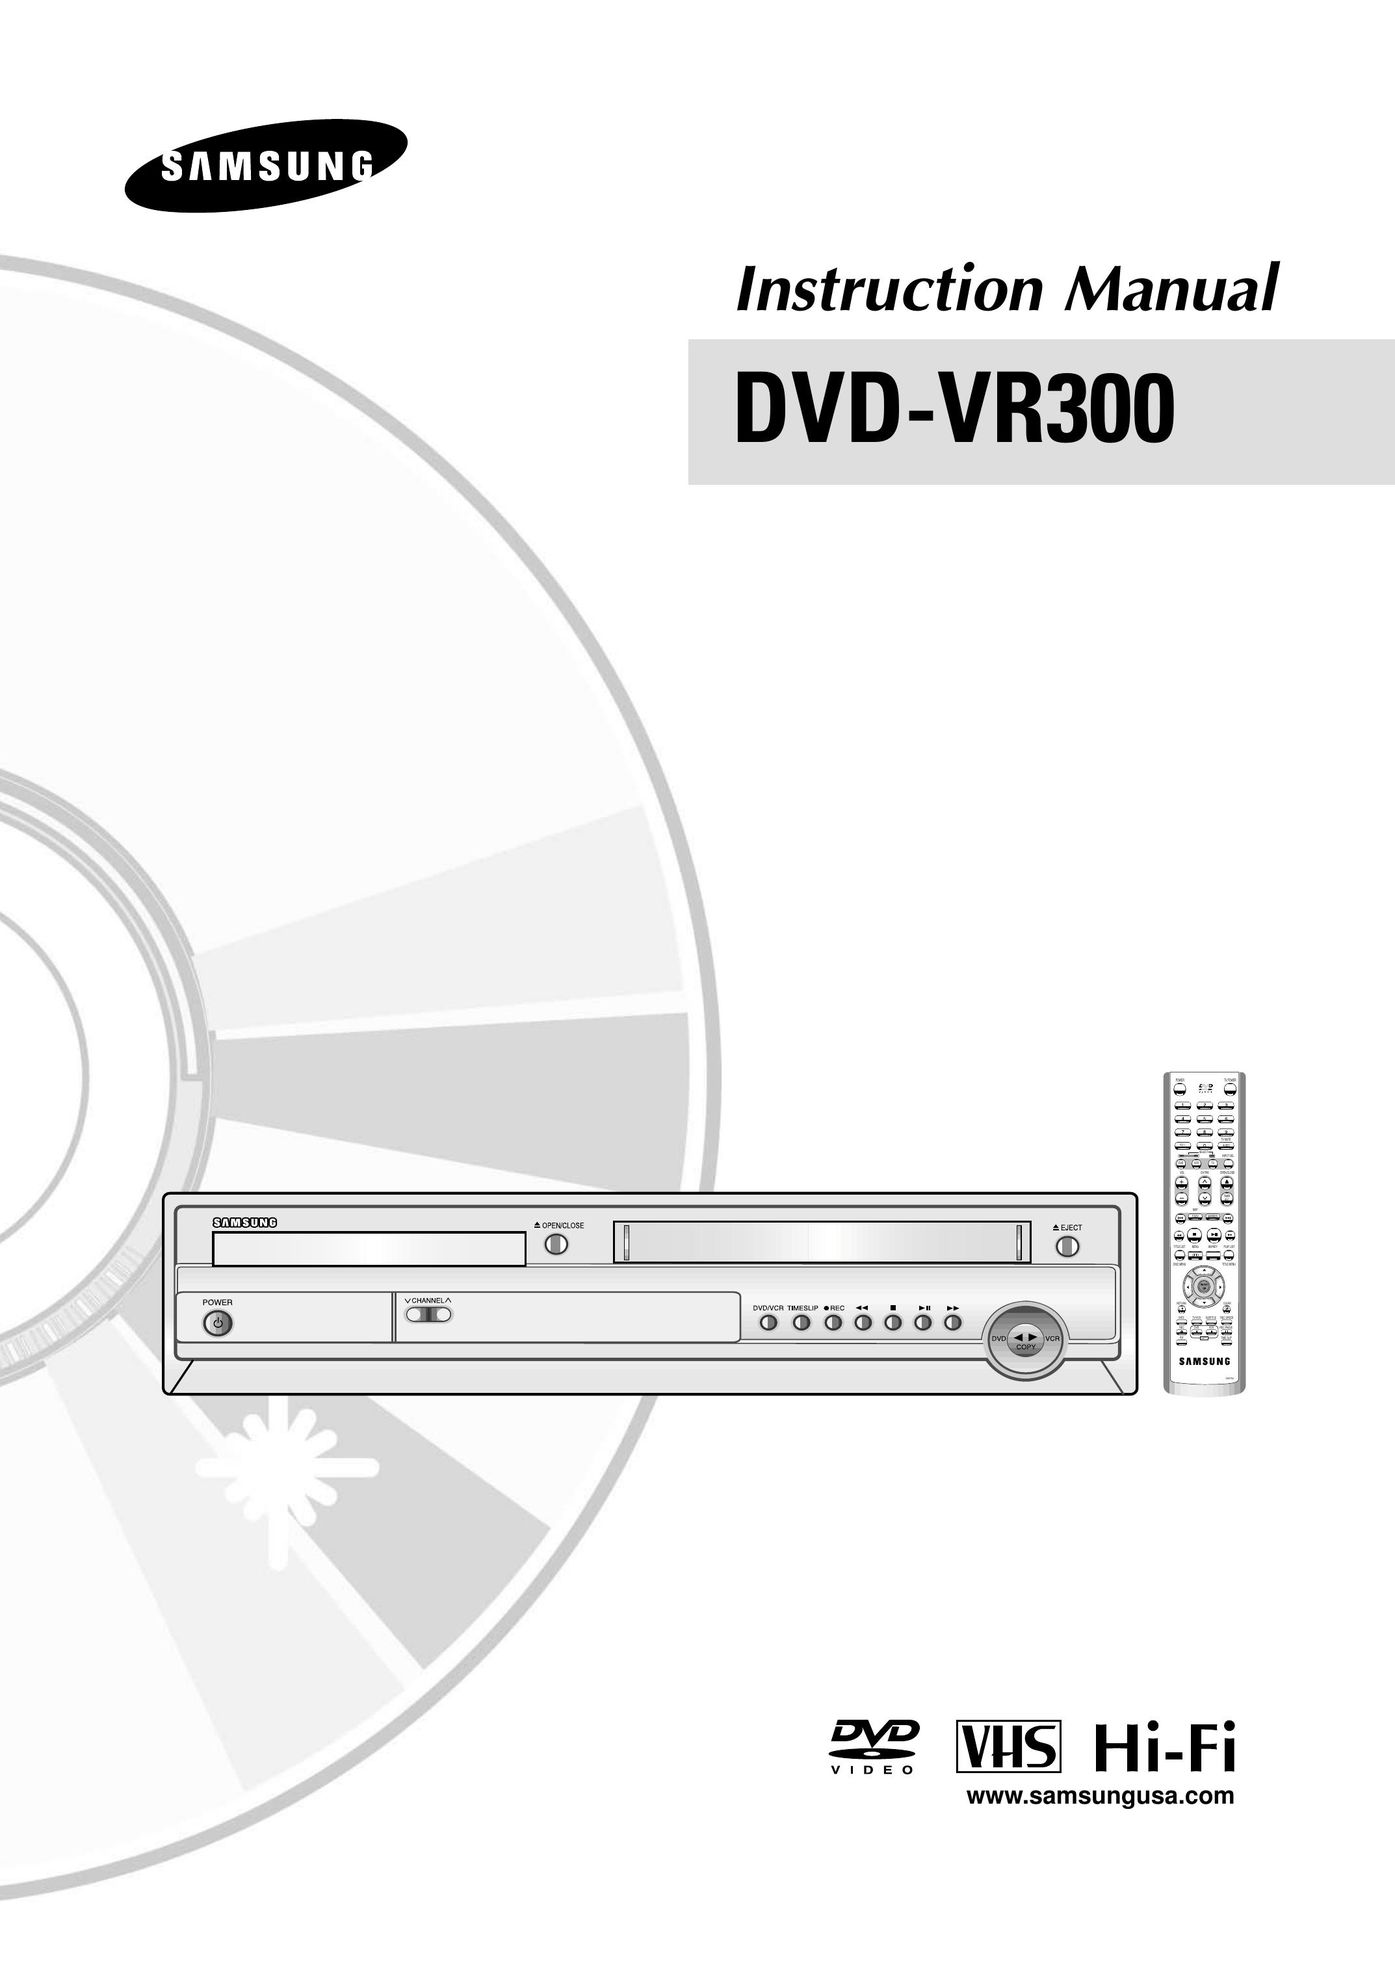 Samsung DVDVR300 MP3 Player User Manual